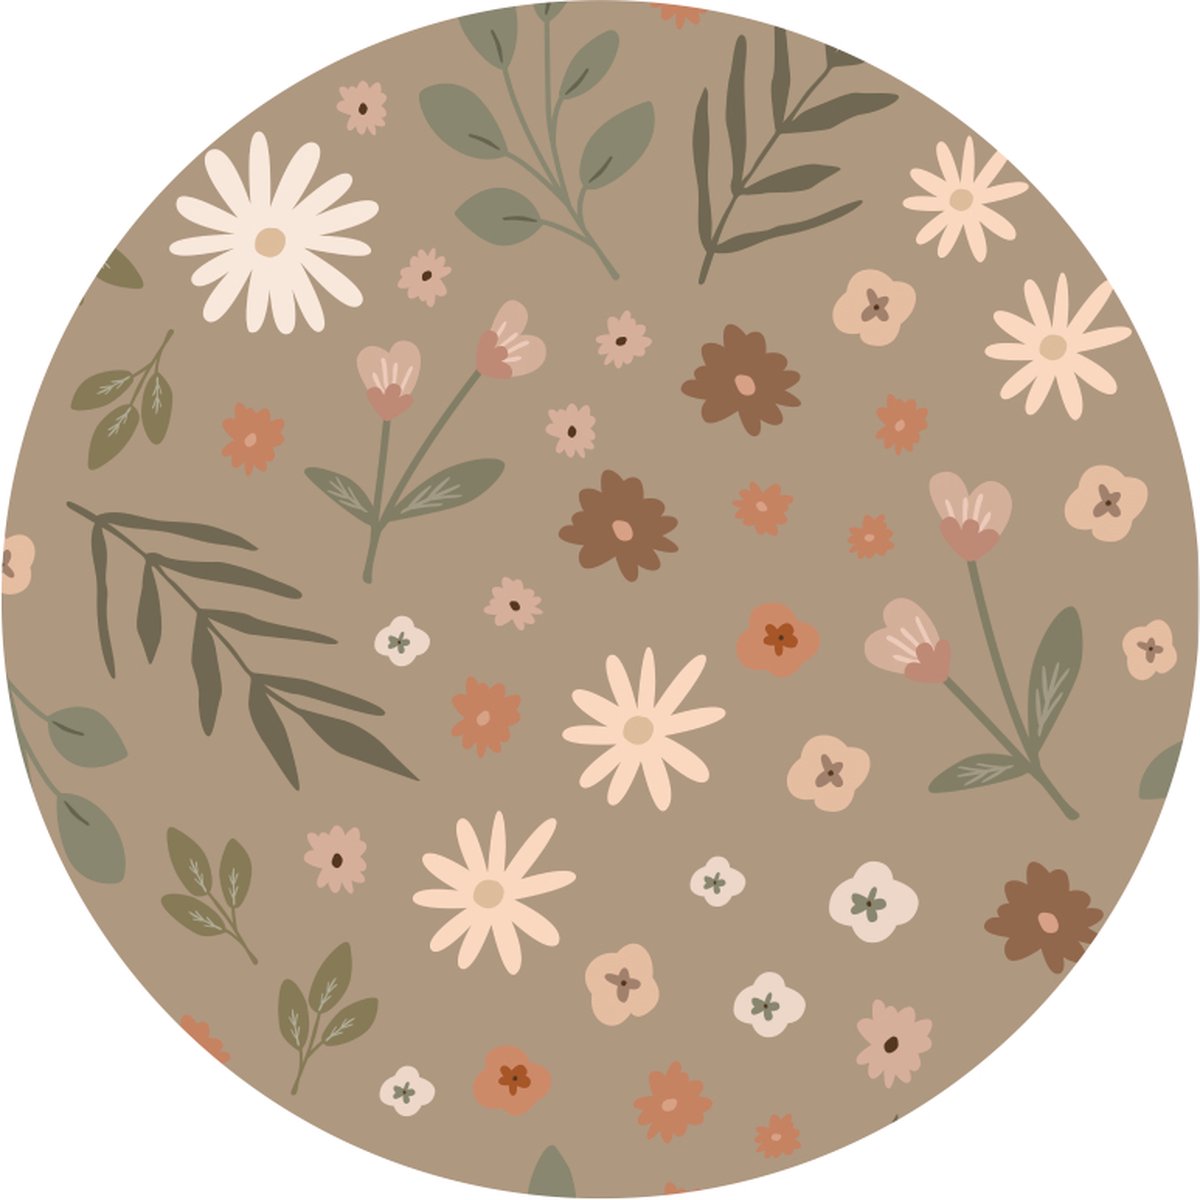 Behangcirkel Flowerprint bruin - Ø 50 cm - Muurcirkel binnen - Wanddecoratie - Bloemenprint abstract - PVC-vrij airtex behang - Babykamer en kinderkamer - Babykamer accessoires